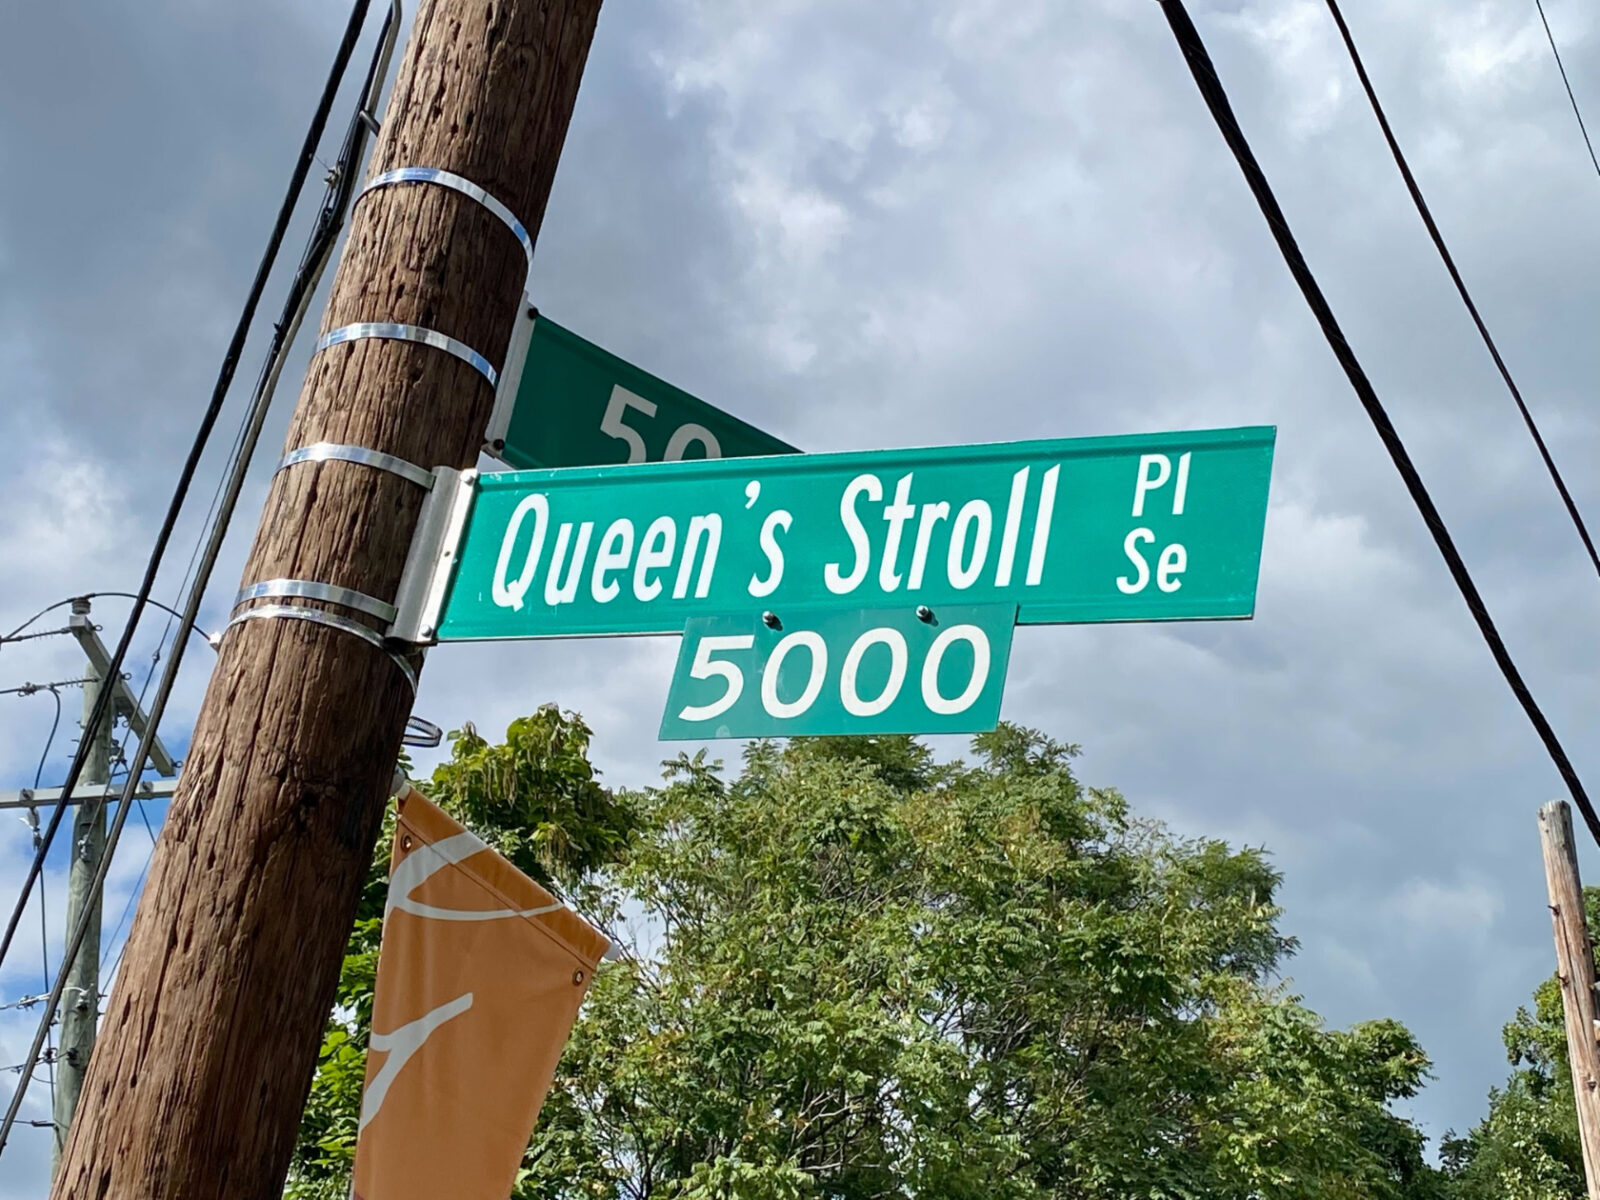 A D.C. street sign reads "Queen's Stroll Pl. SE" 